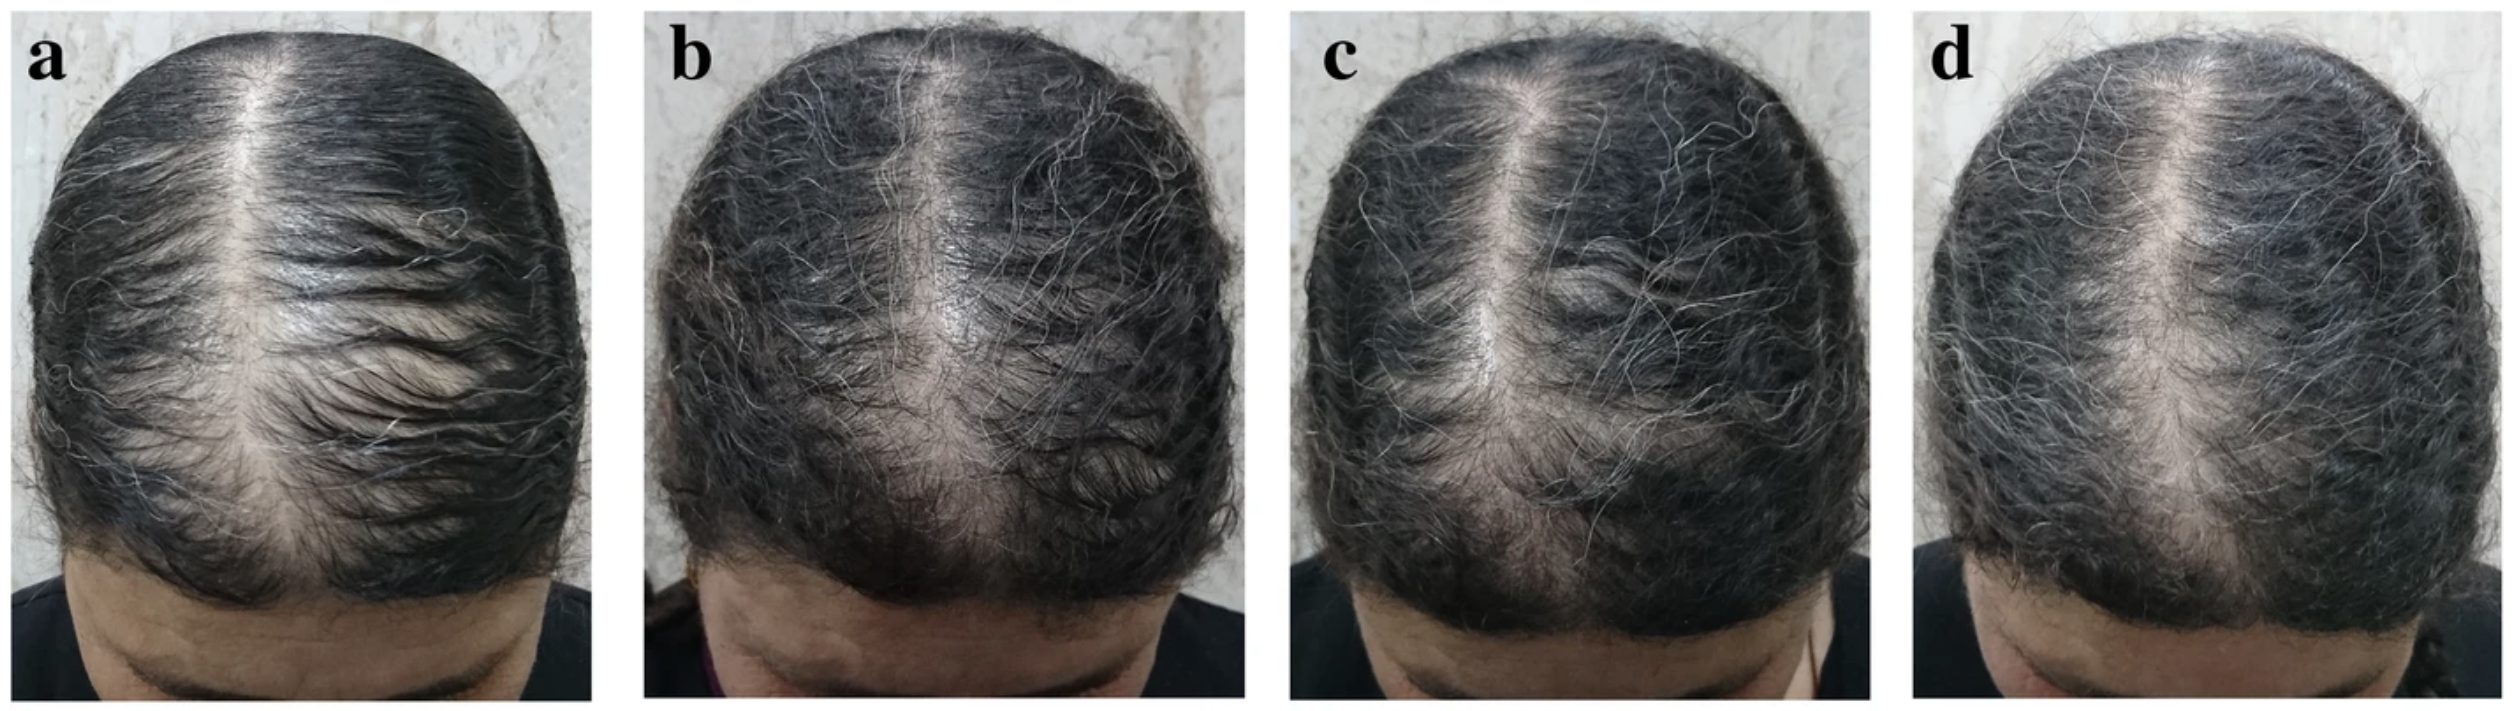 hair loss improvement following topical ketoconazole use